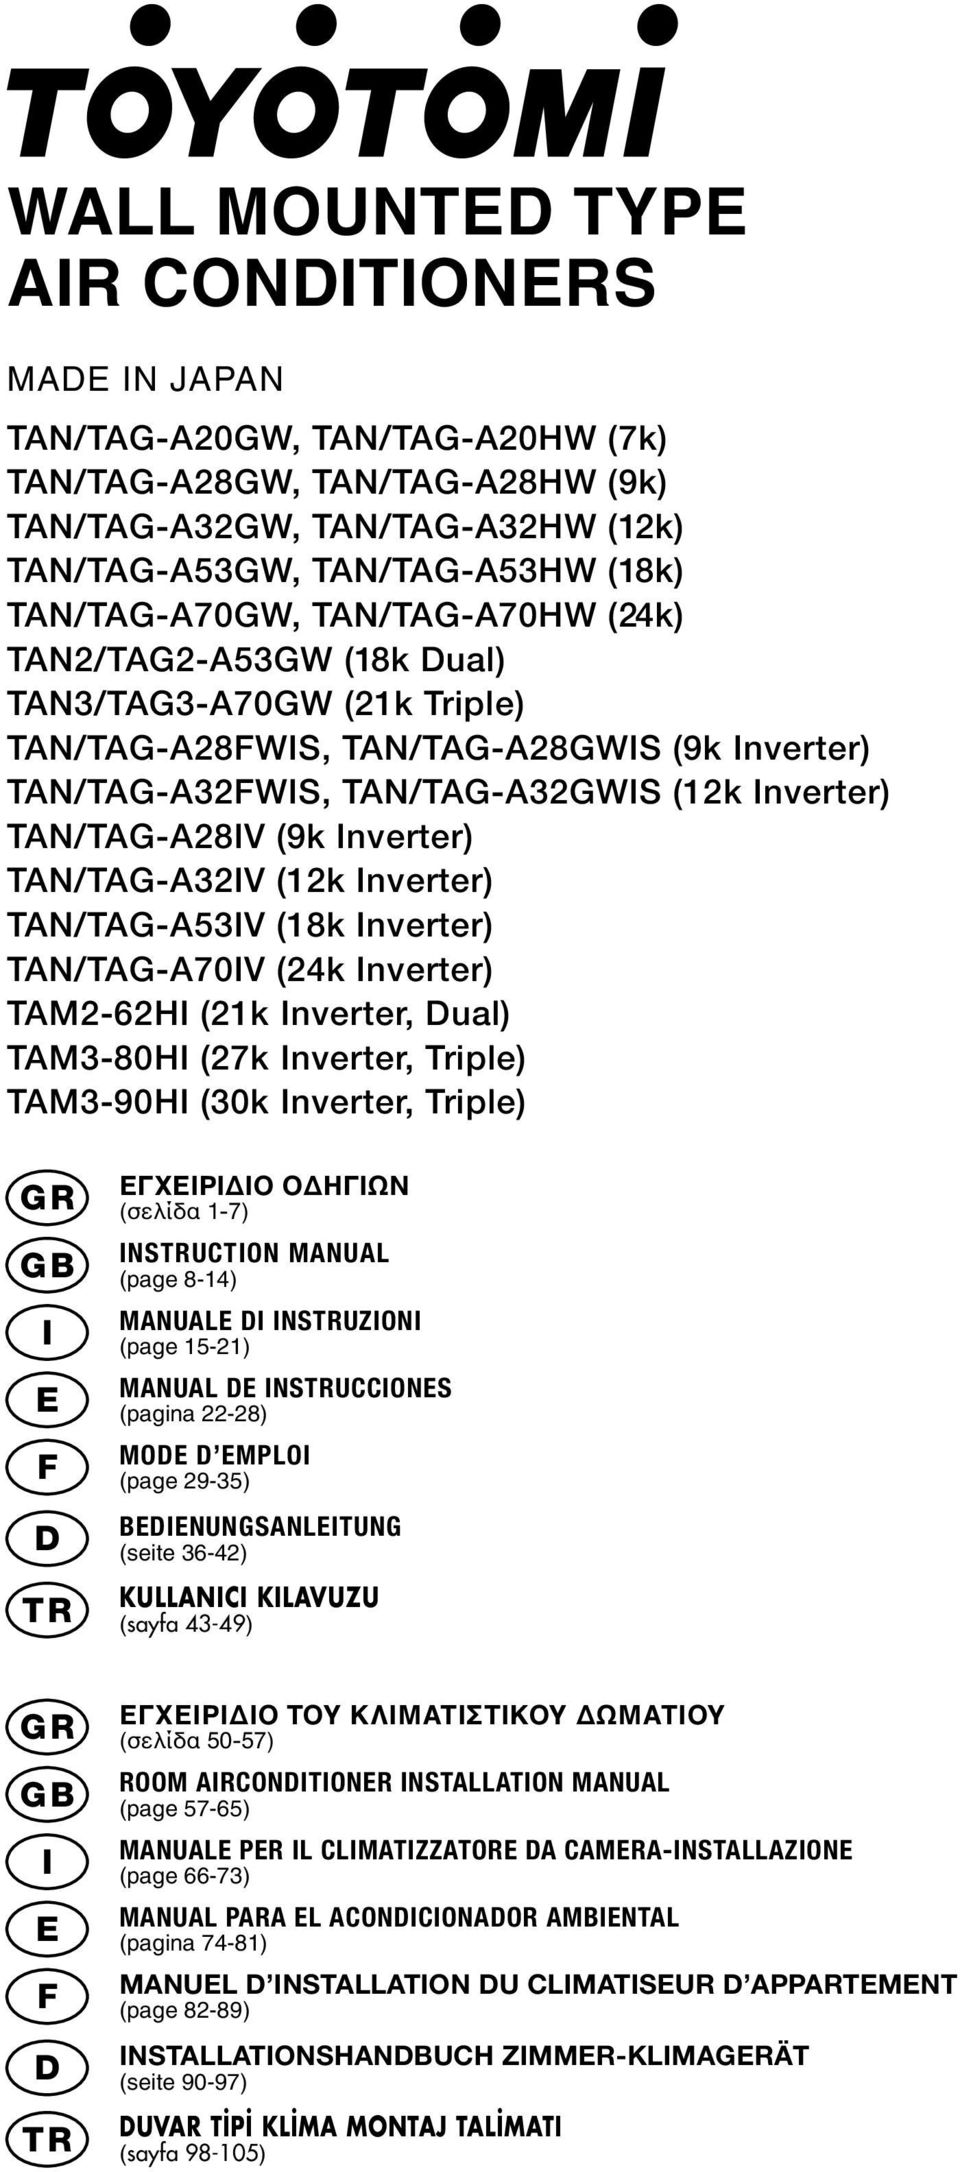 Inverter) TAN/TAG-AIV (8k Inverter) TAN/TAG-A70IV (k Inverter) TAM-6HI (k Inverter, Dual) TAM-80HI (7k Inverter, Triple) TAM-90HI (0k Inverter, Triple) GR GB I E F D TR ΕΓΧΕΙΡΙ ΙΟ Ο ΗΓΙΩΝ (σελίδα -7)